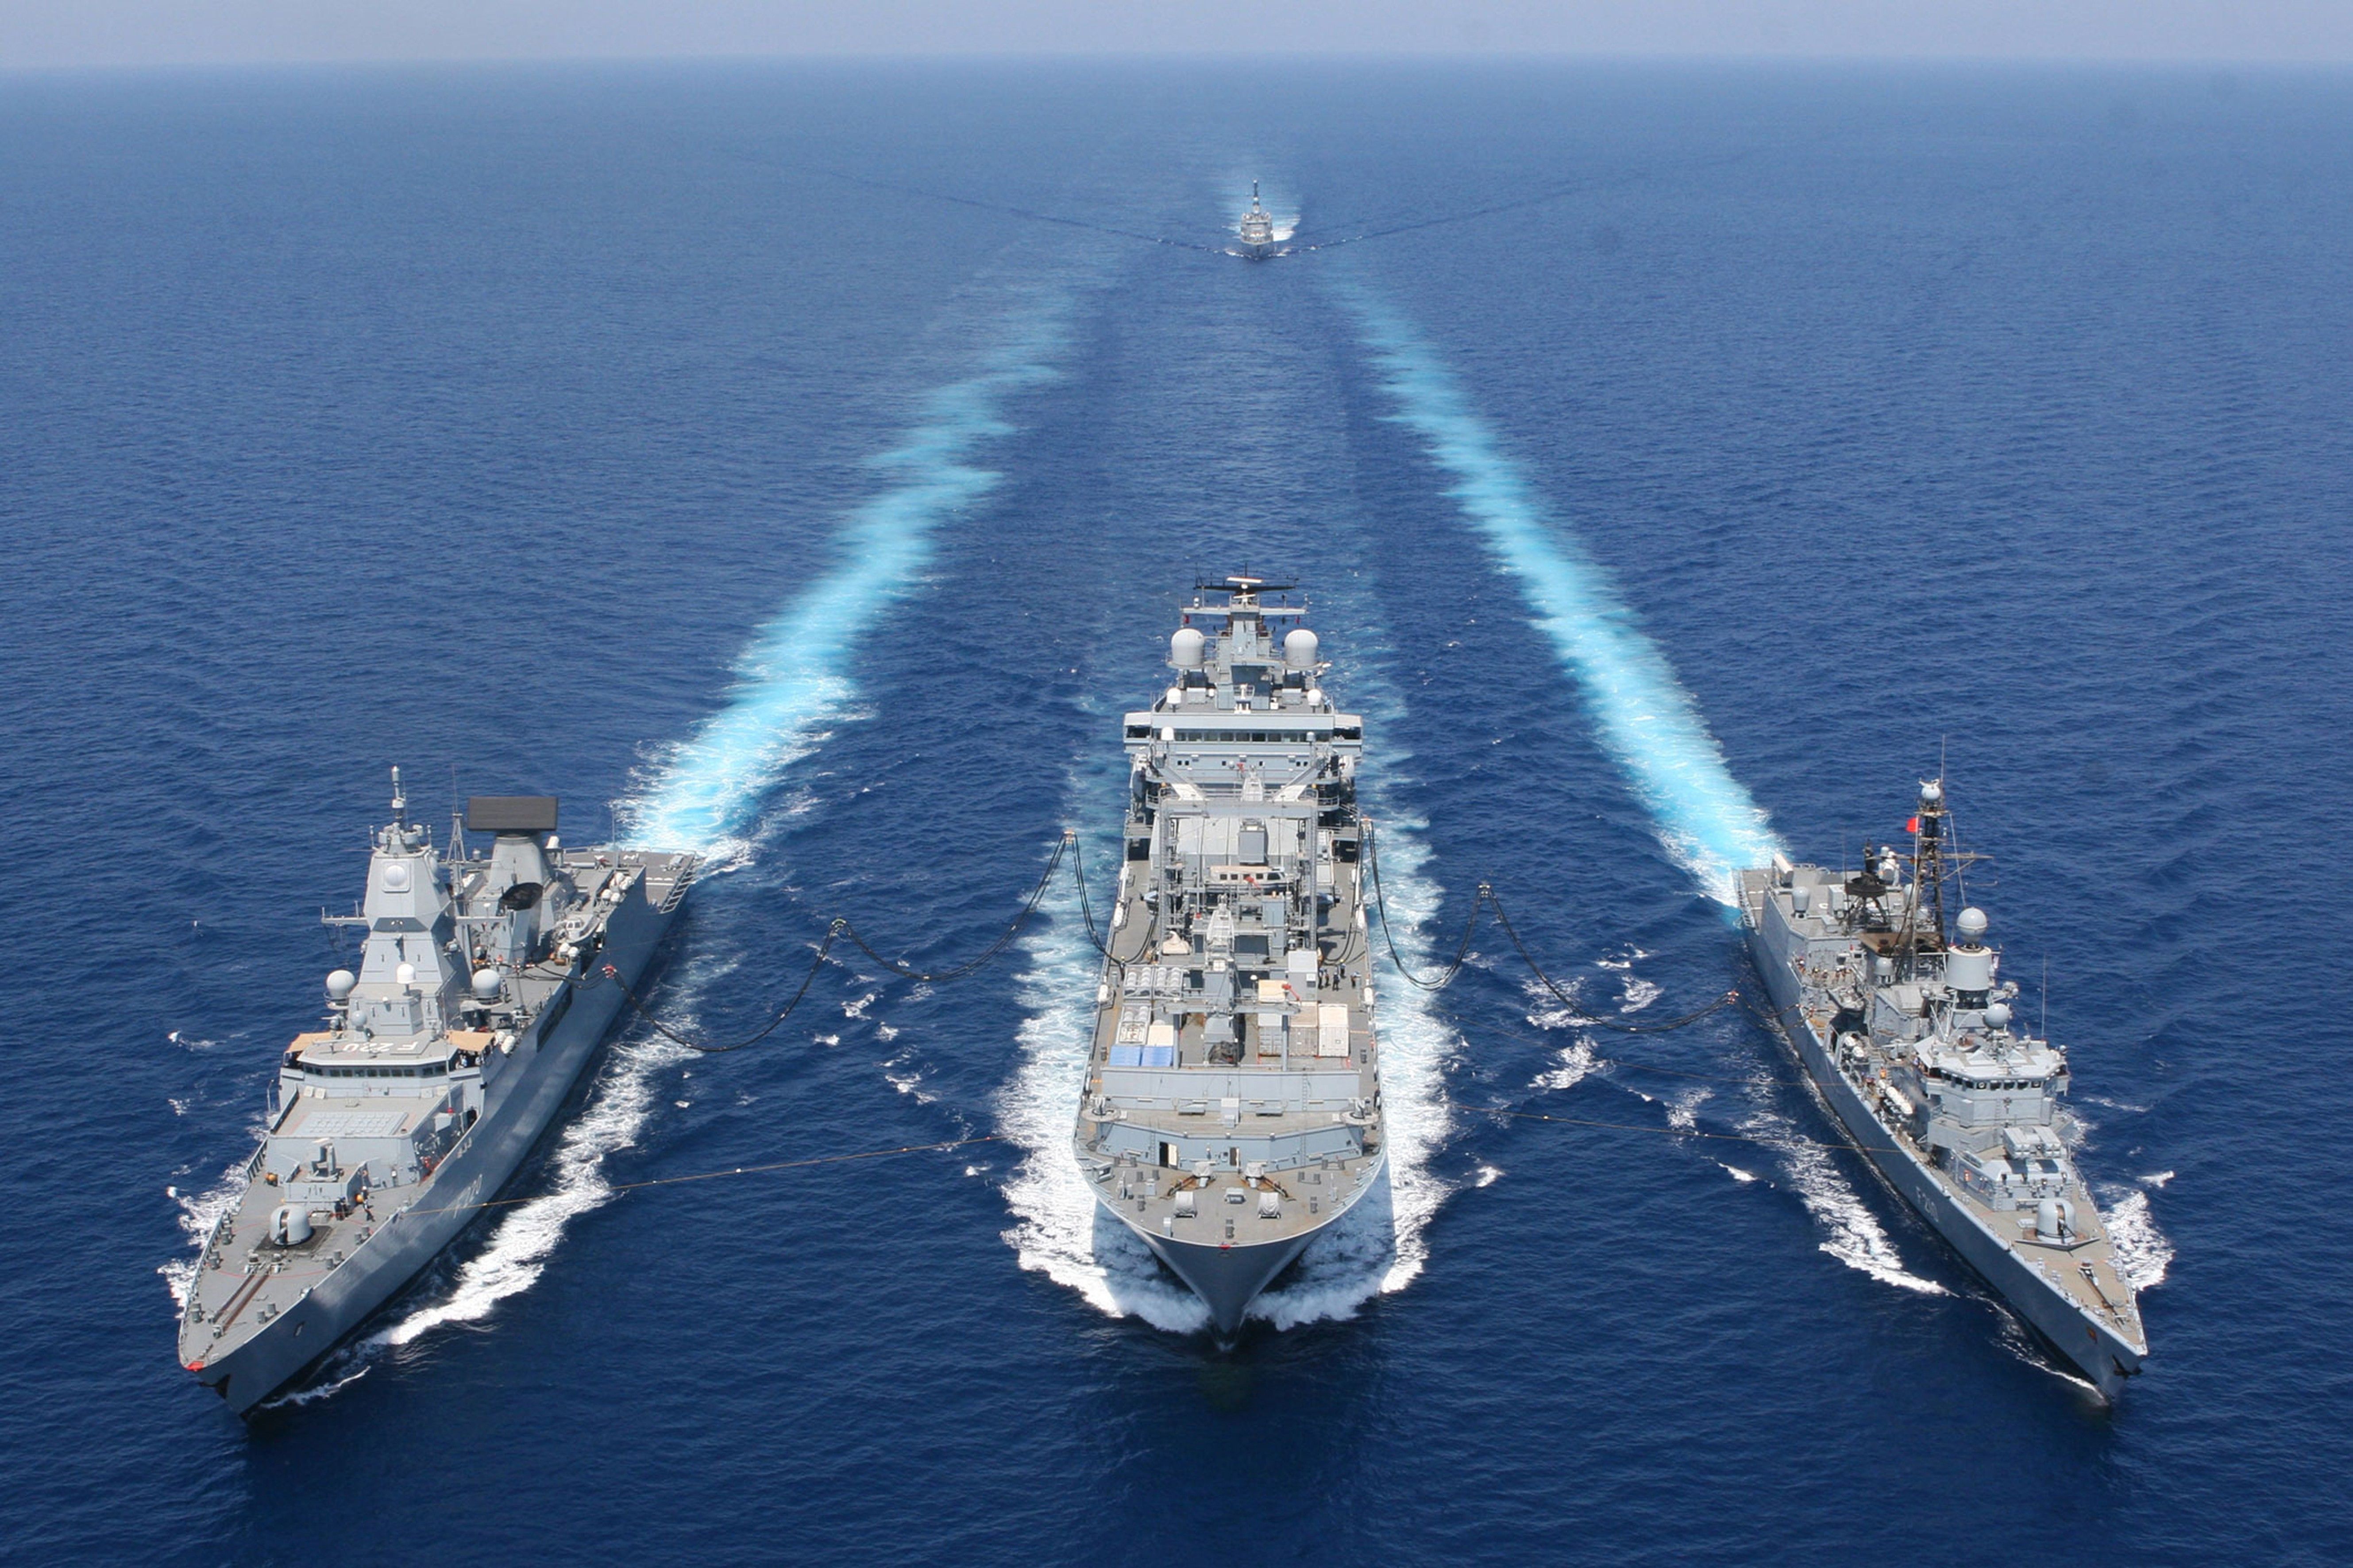 Vessel warships formation blue sea refueling marine wallpaper